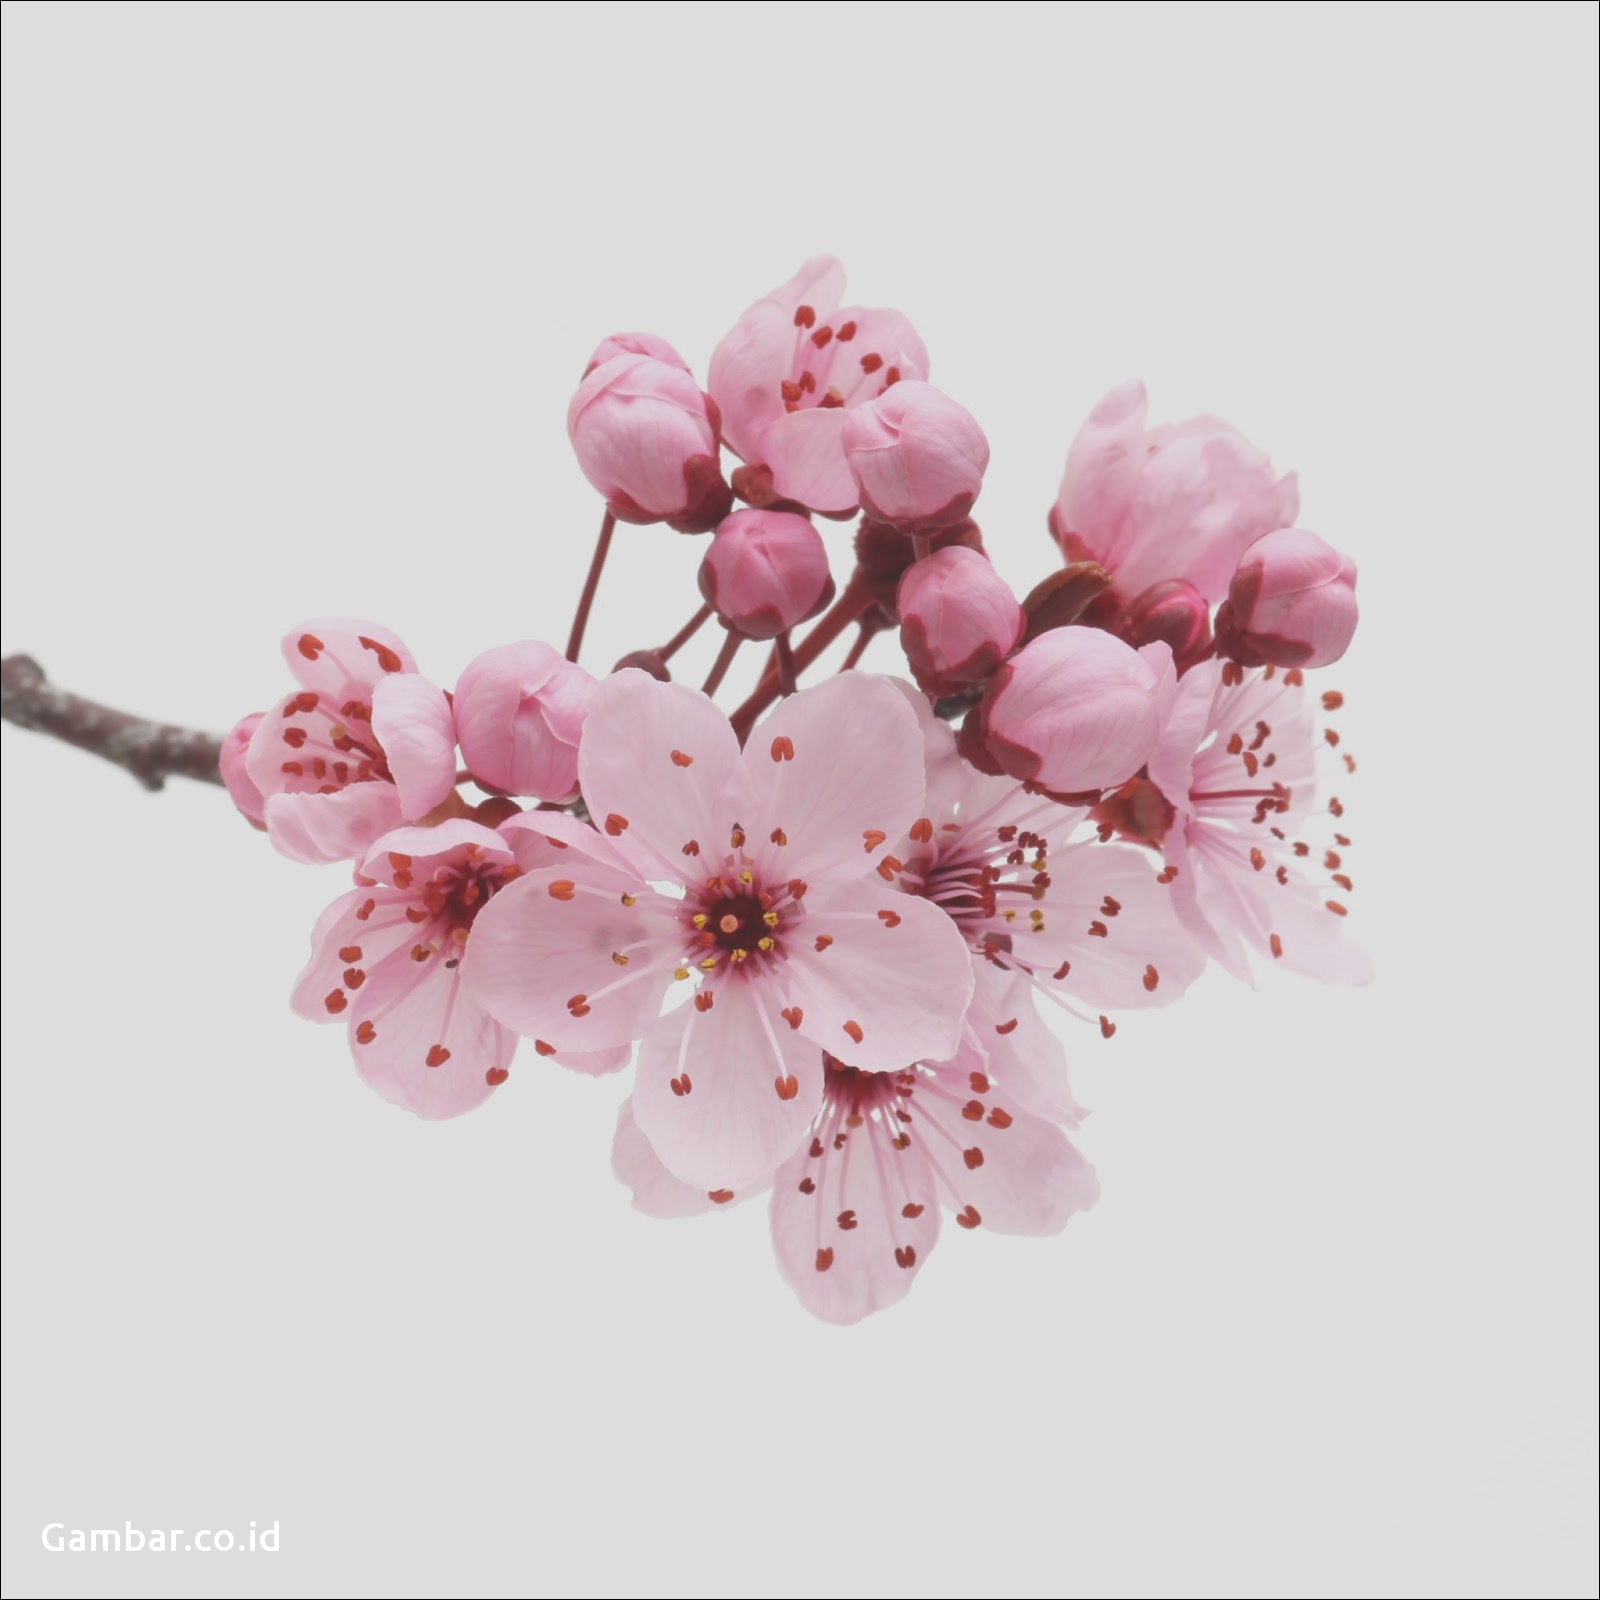 Thumb Image - Sakura Cherry Blossom Png - HD Wallpaper 